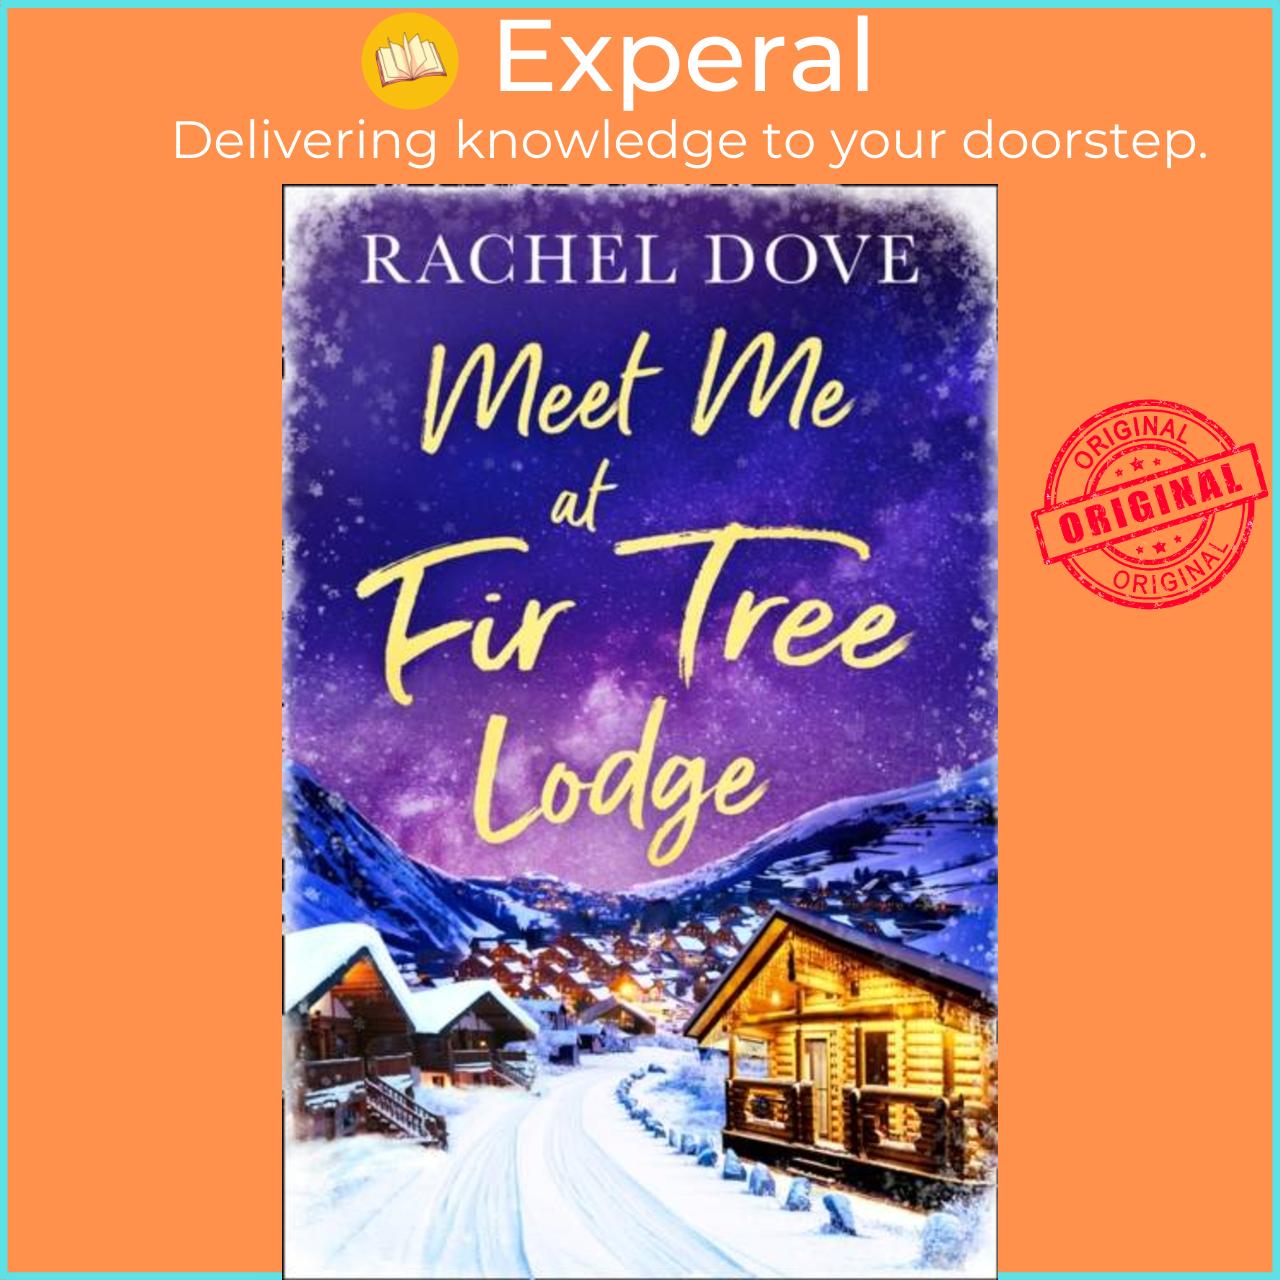 Sách - Meet Me at Fir Tree Lodge by Rachel Dove (UK edition, paperback)